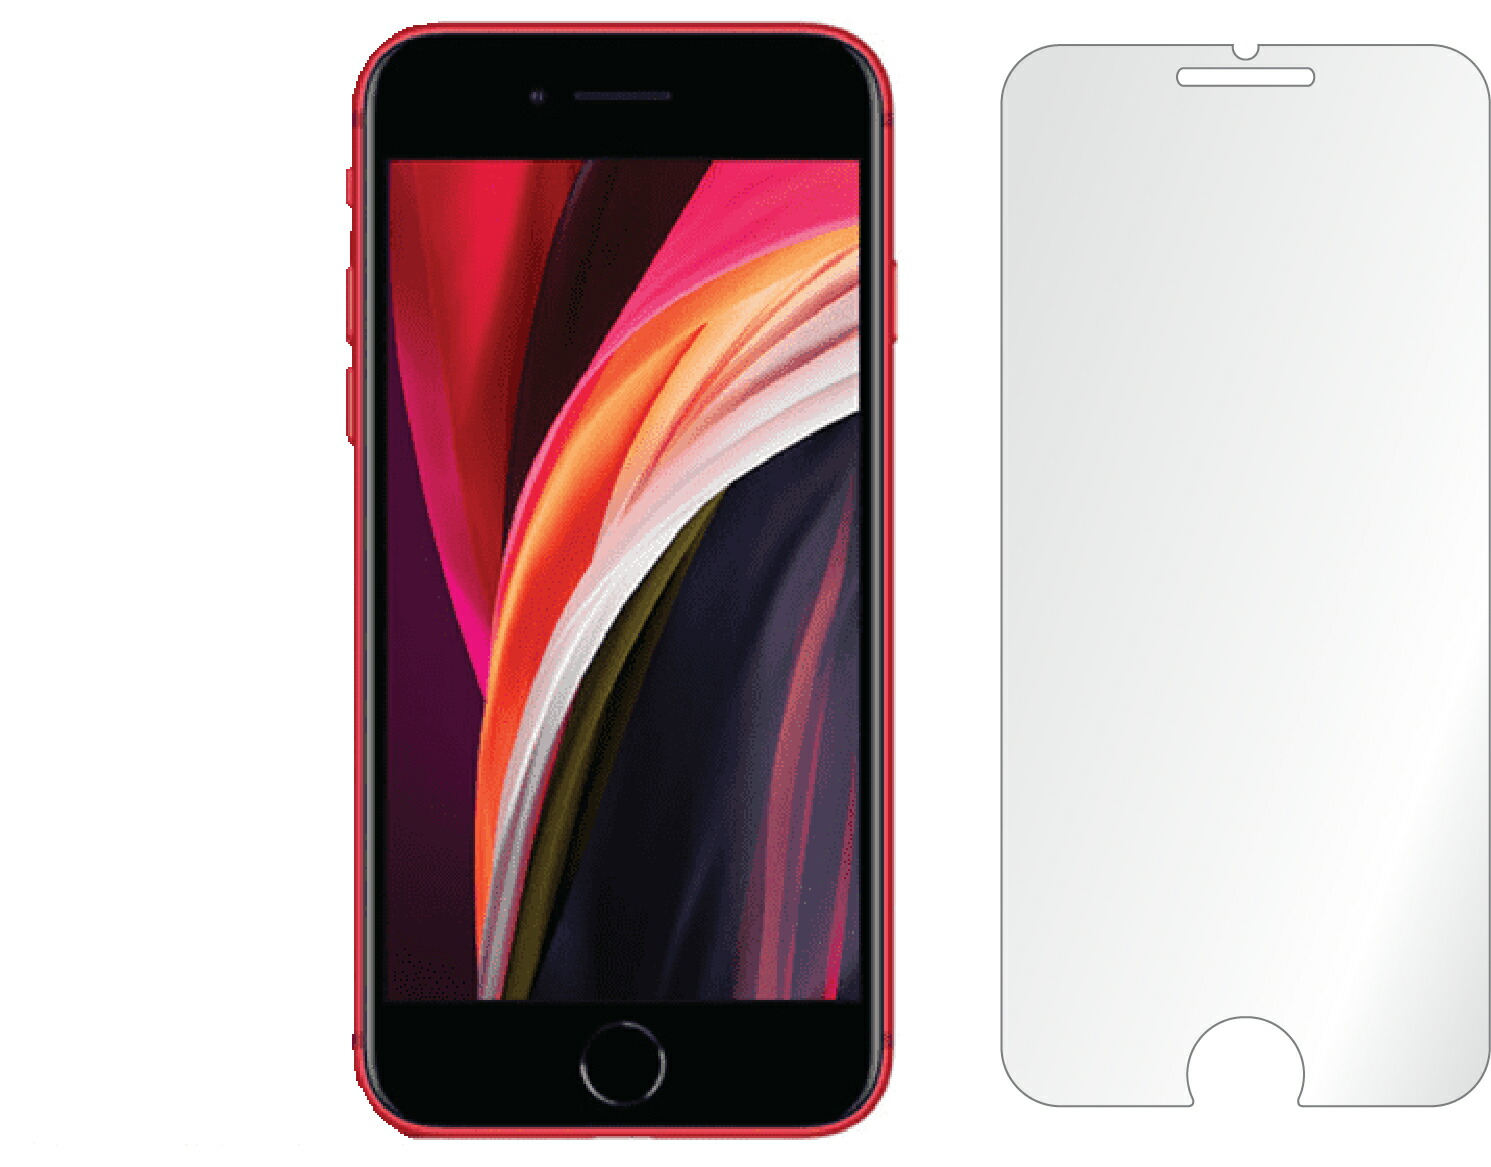 Apple iPhone 12 mini iPhone SE2 (第2世代・2020年版) 専用 ガラスフィルム 強化ガラス スマートフォン専用フィルム 硬度9H 飛散防止 指紋防止 自動吸着 気泡防止 液晶保護フィルム